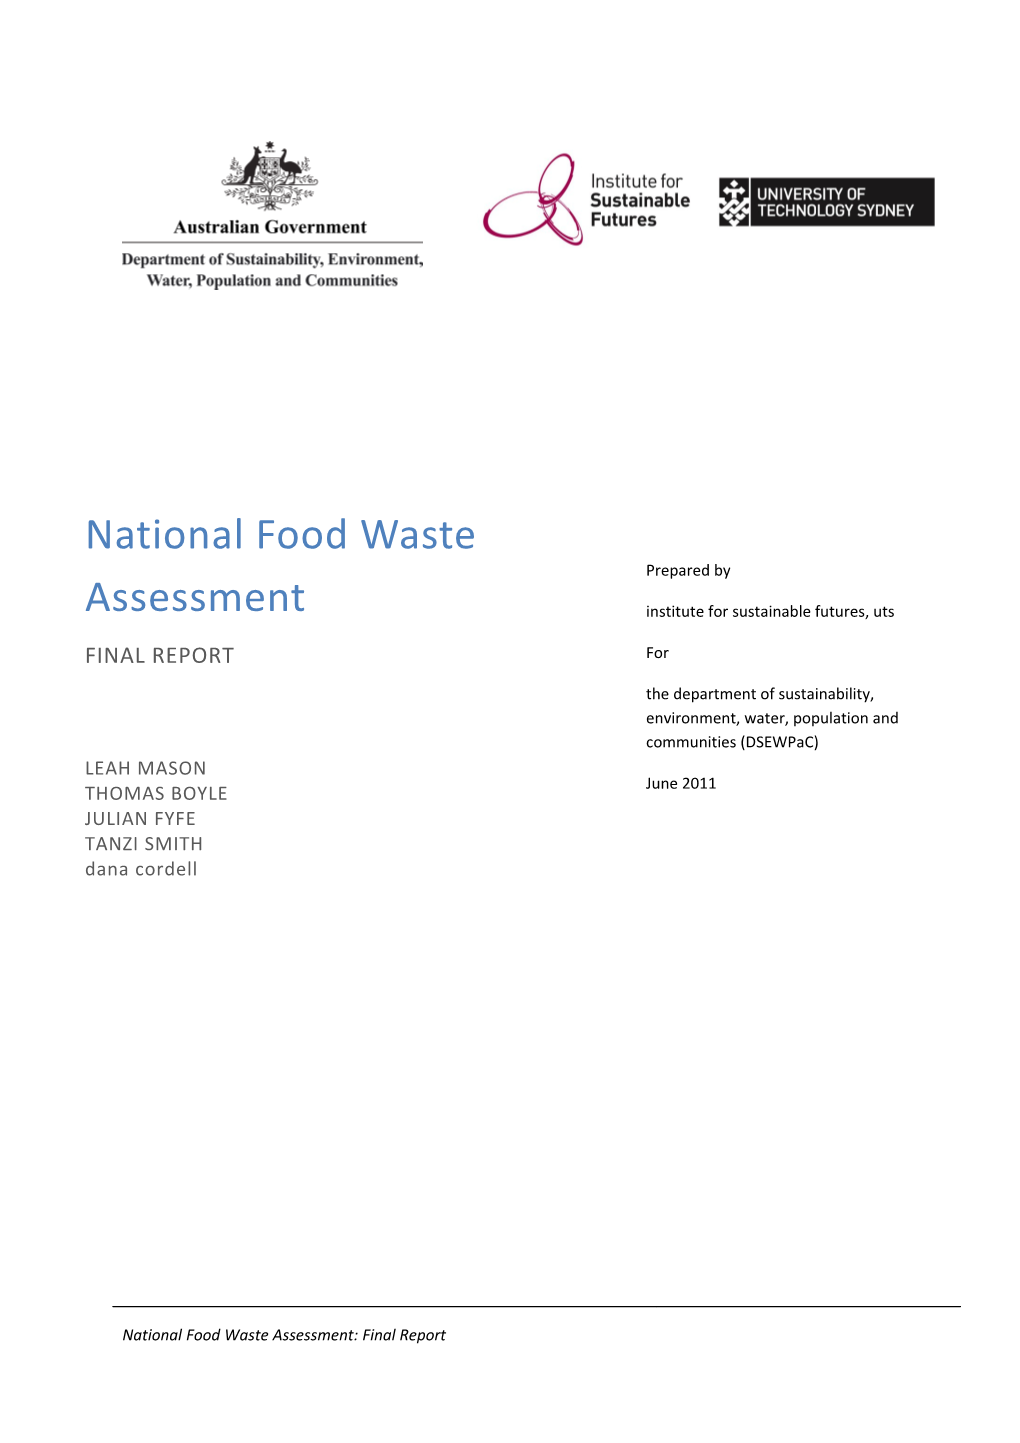 National Food Waste Assessment - Final Report